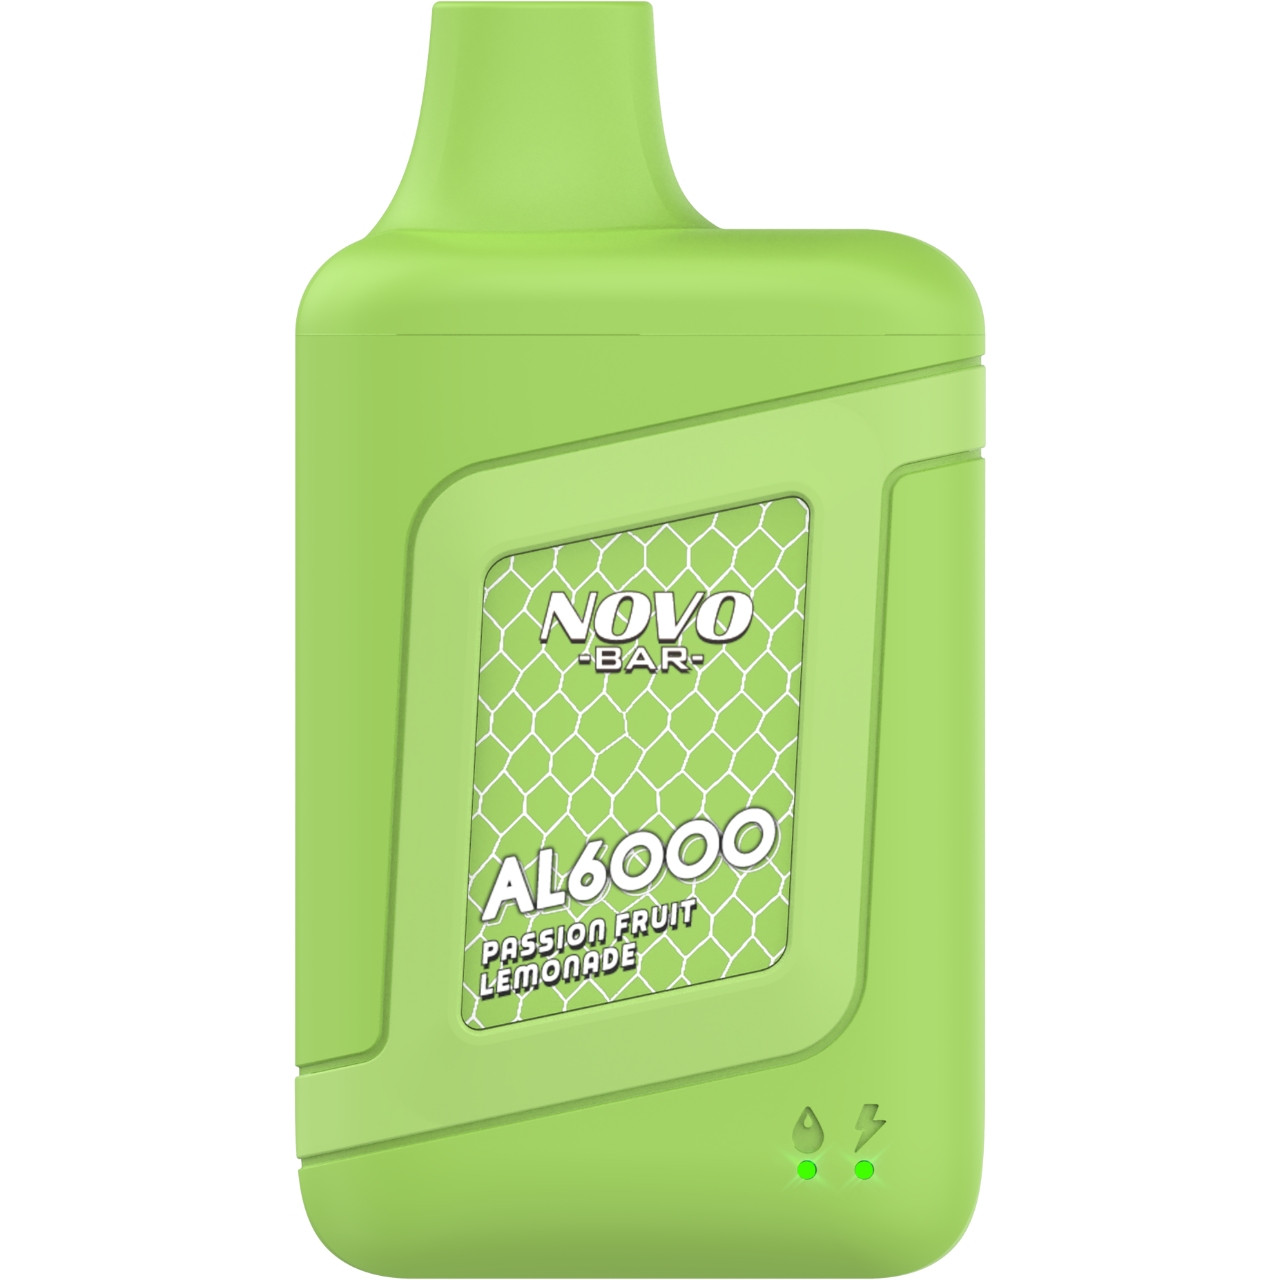 SMOK NOVO Bar AL6000 Disposable Device (6000 Puffs) -Passionfruit Lemonade